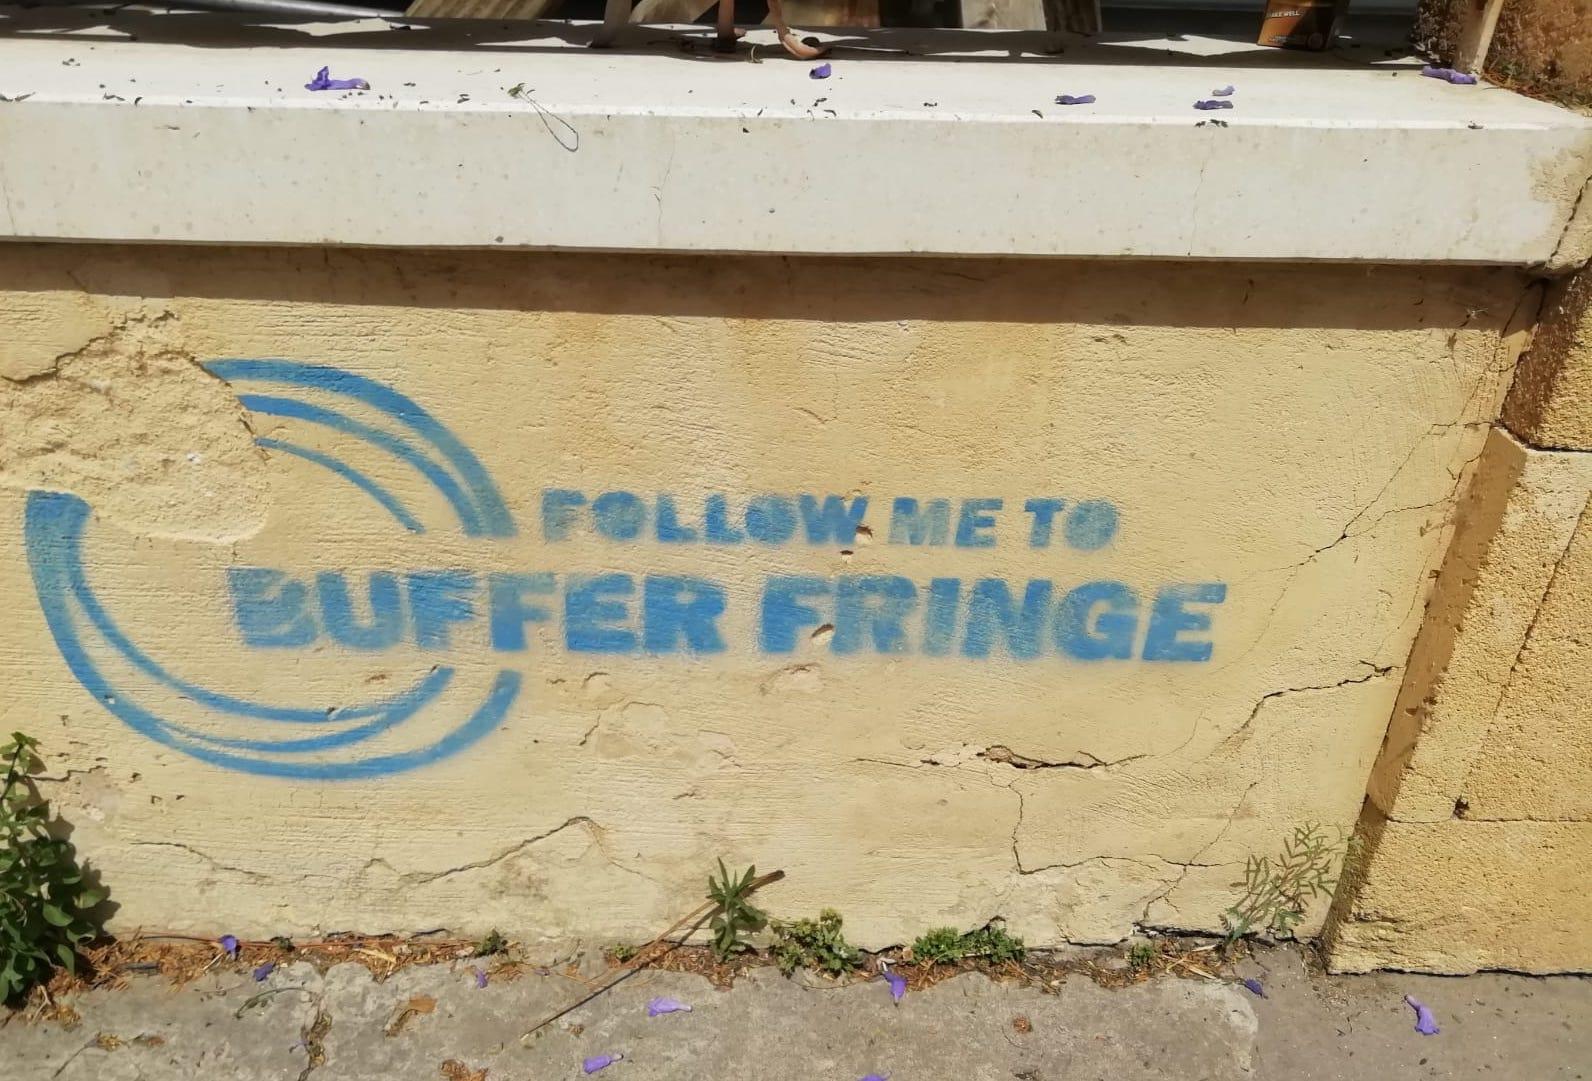 Graffiti seen on wall in Nicosia in blue lettering reads 